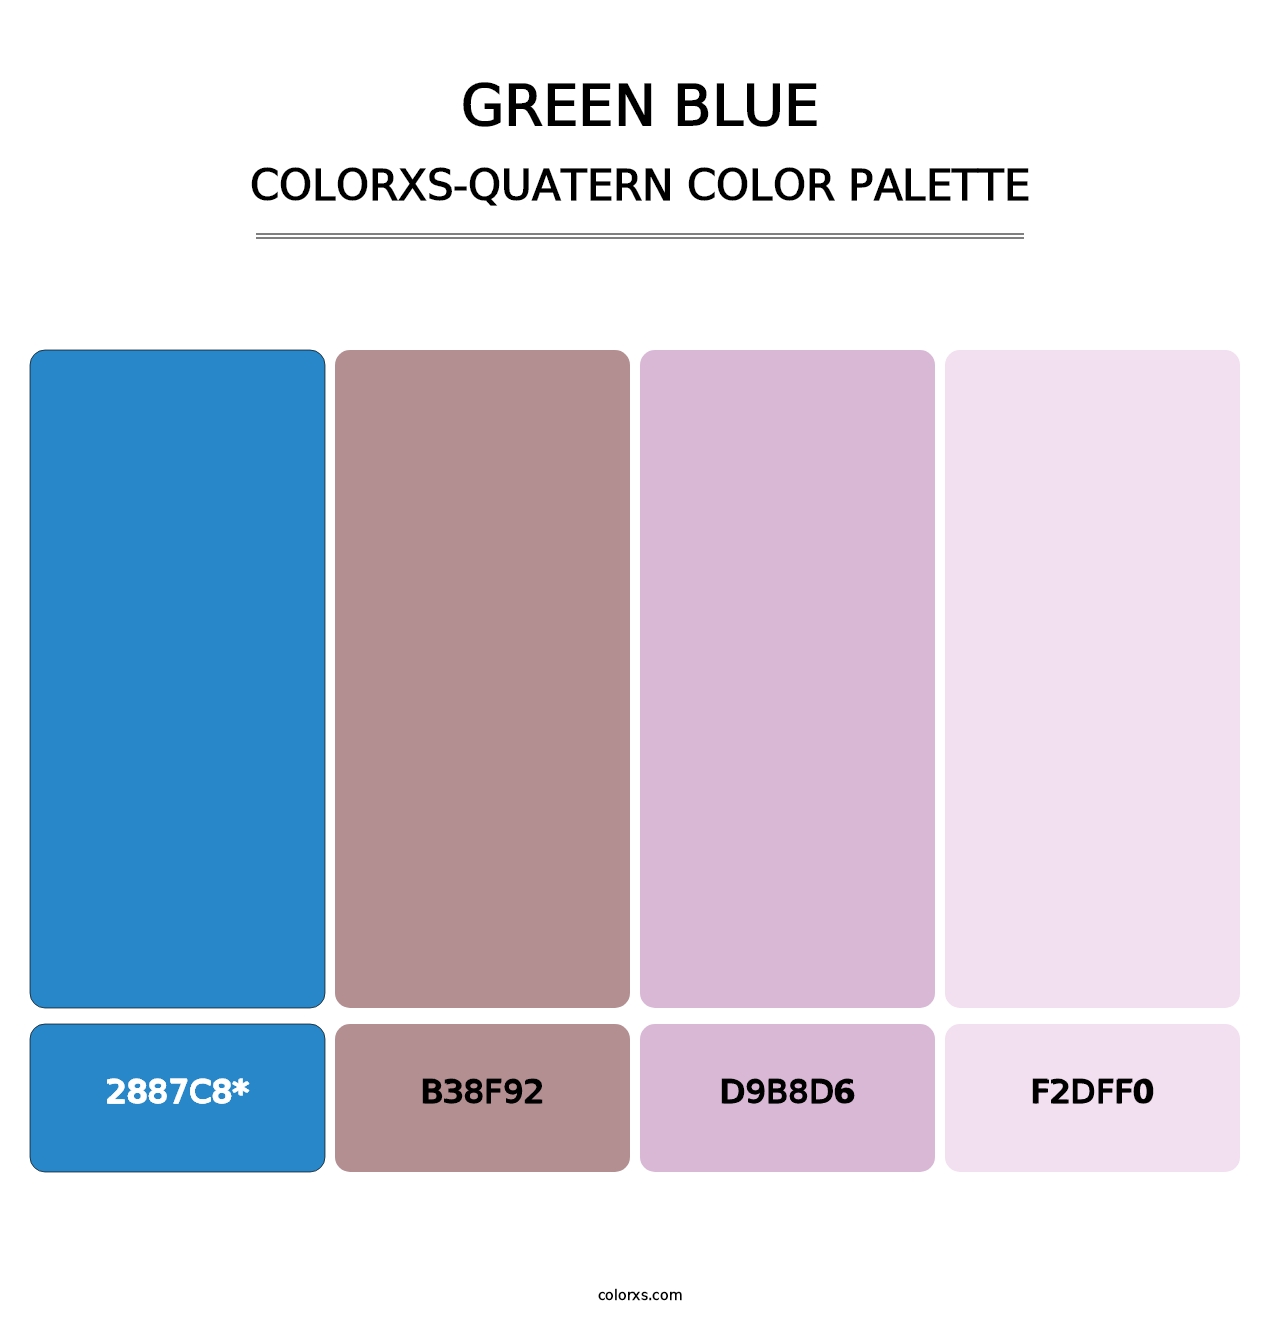 Green Blue - Colorxs Quatern Palette